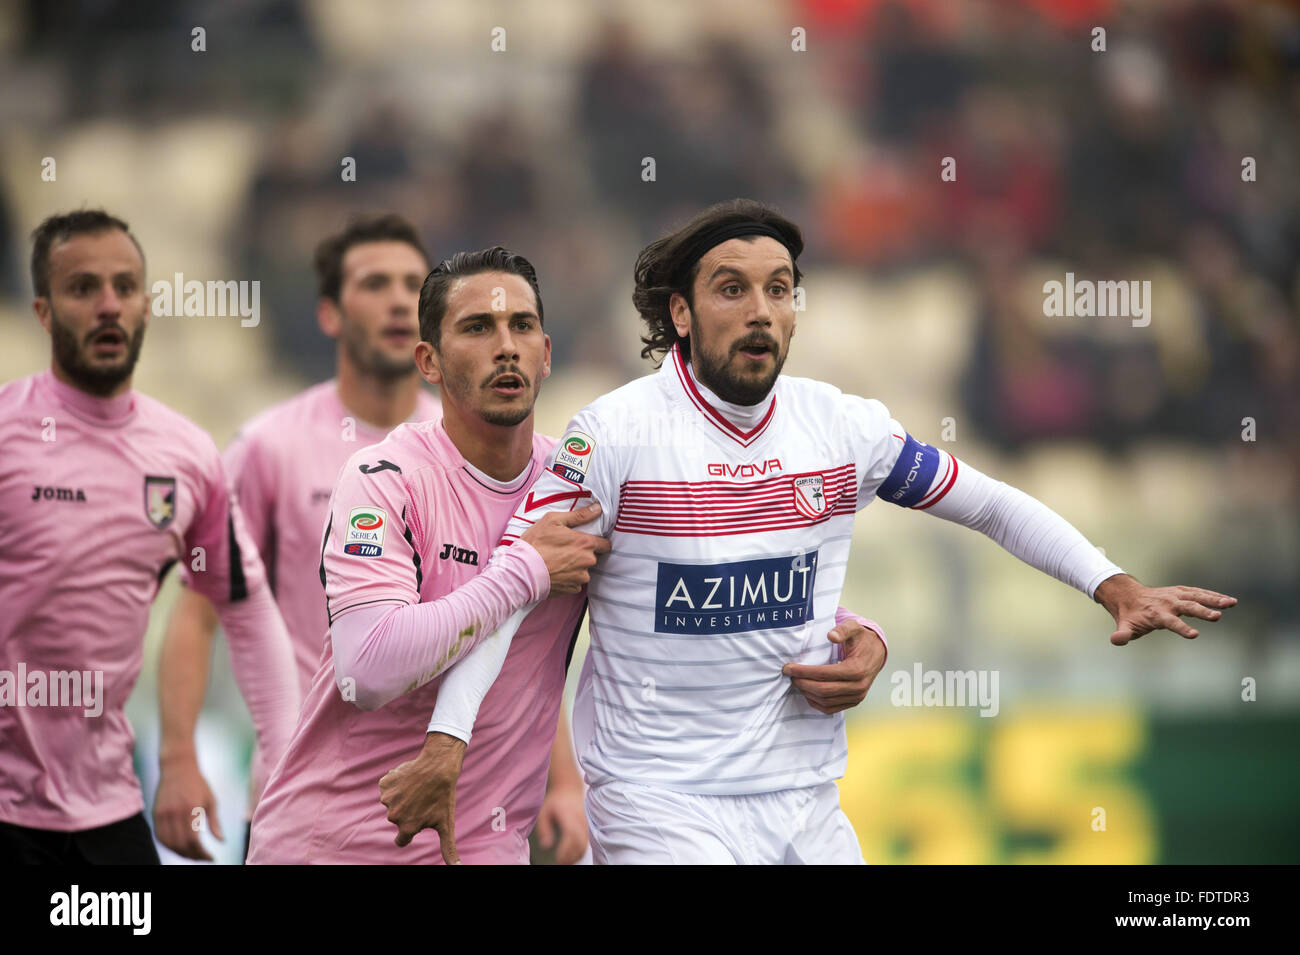 U.S. Città di Palermo - Italian Football League - Cristian Zaccardo - 2007  - Jersey - Catawiki